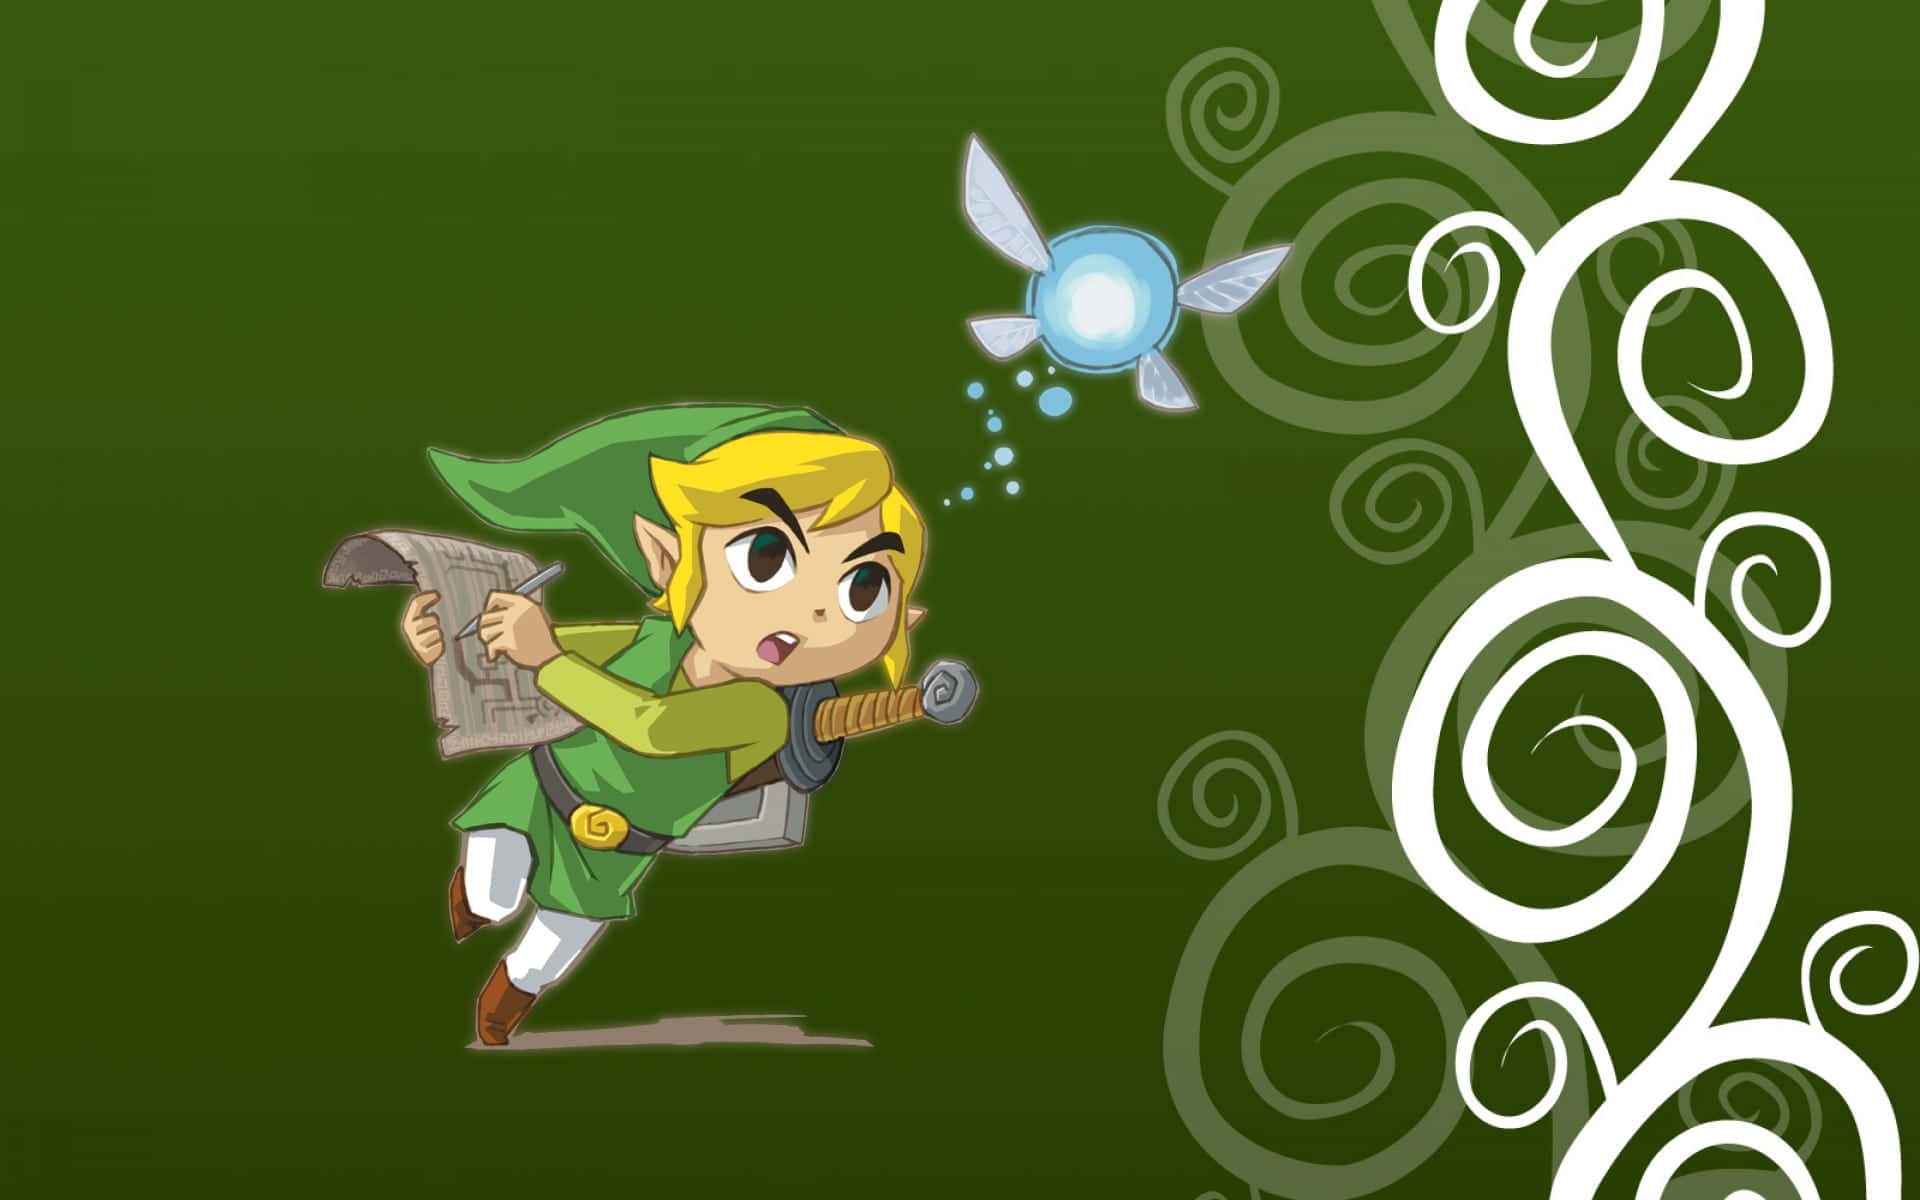 Navi the Fairy Guiding Link in The Legend of Zelda Wallpaper